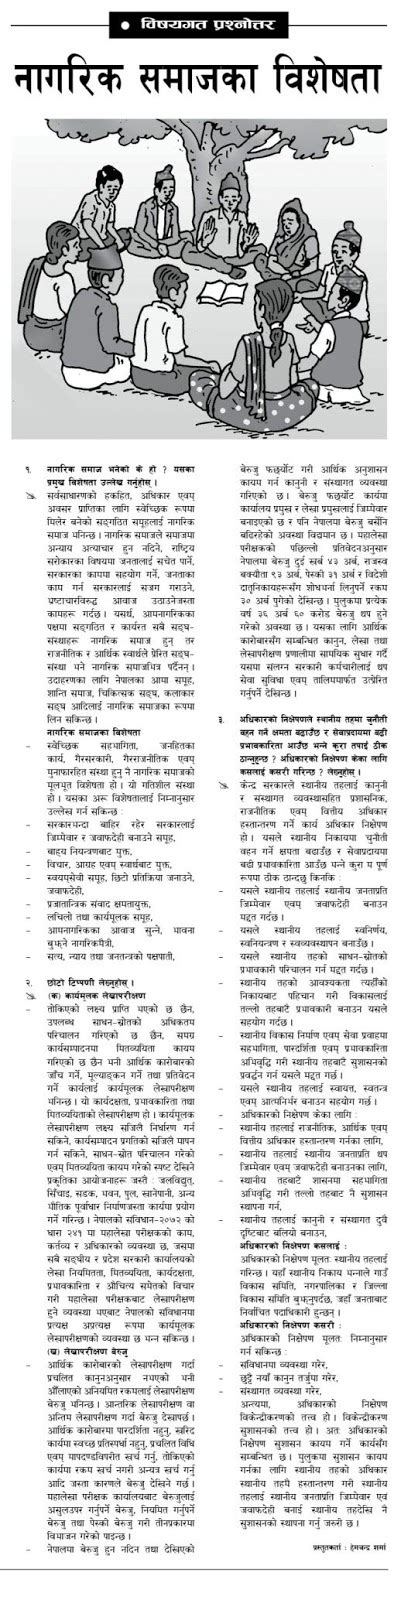 Lok sewa aayog exam public service commission website: Lok Sewa Aayog Reading Materials-85, 2 Poush 2076, Gorkhapatra